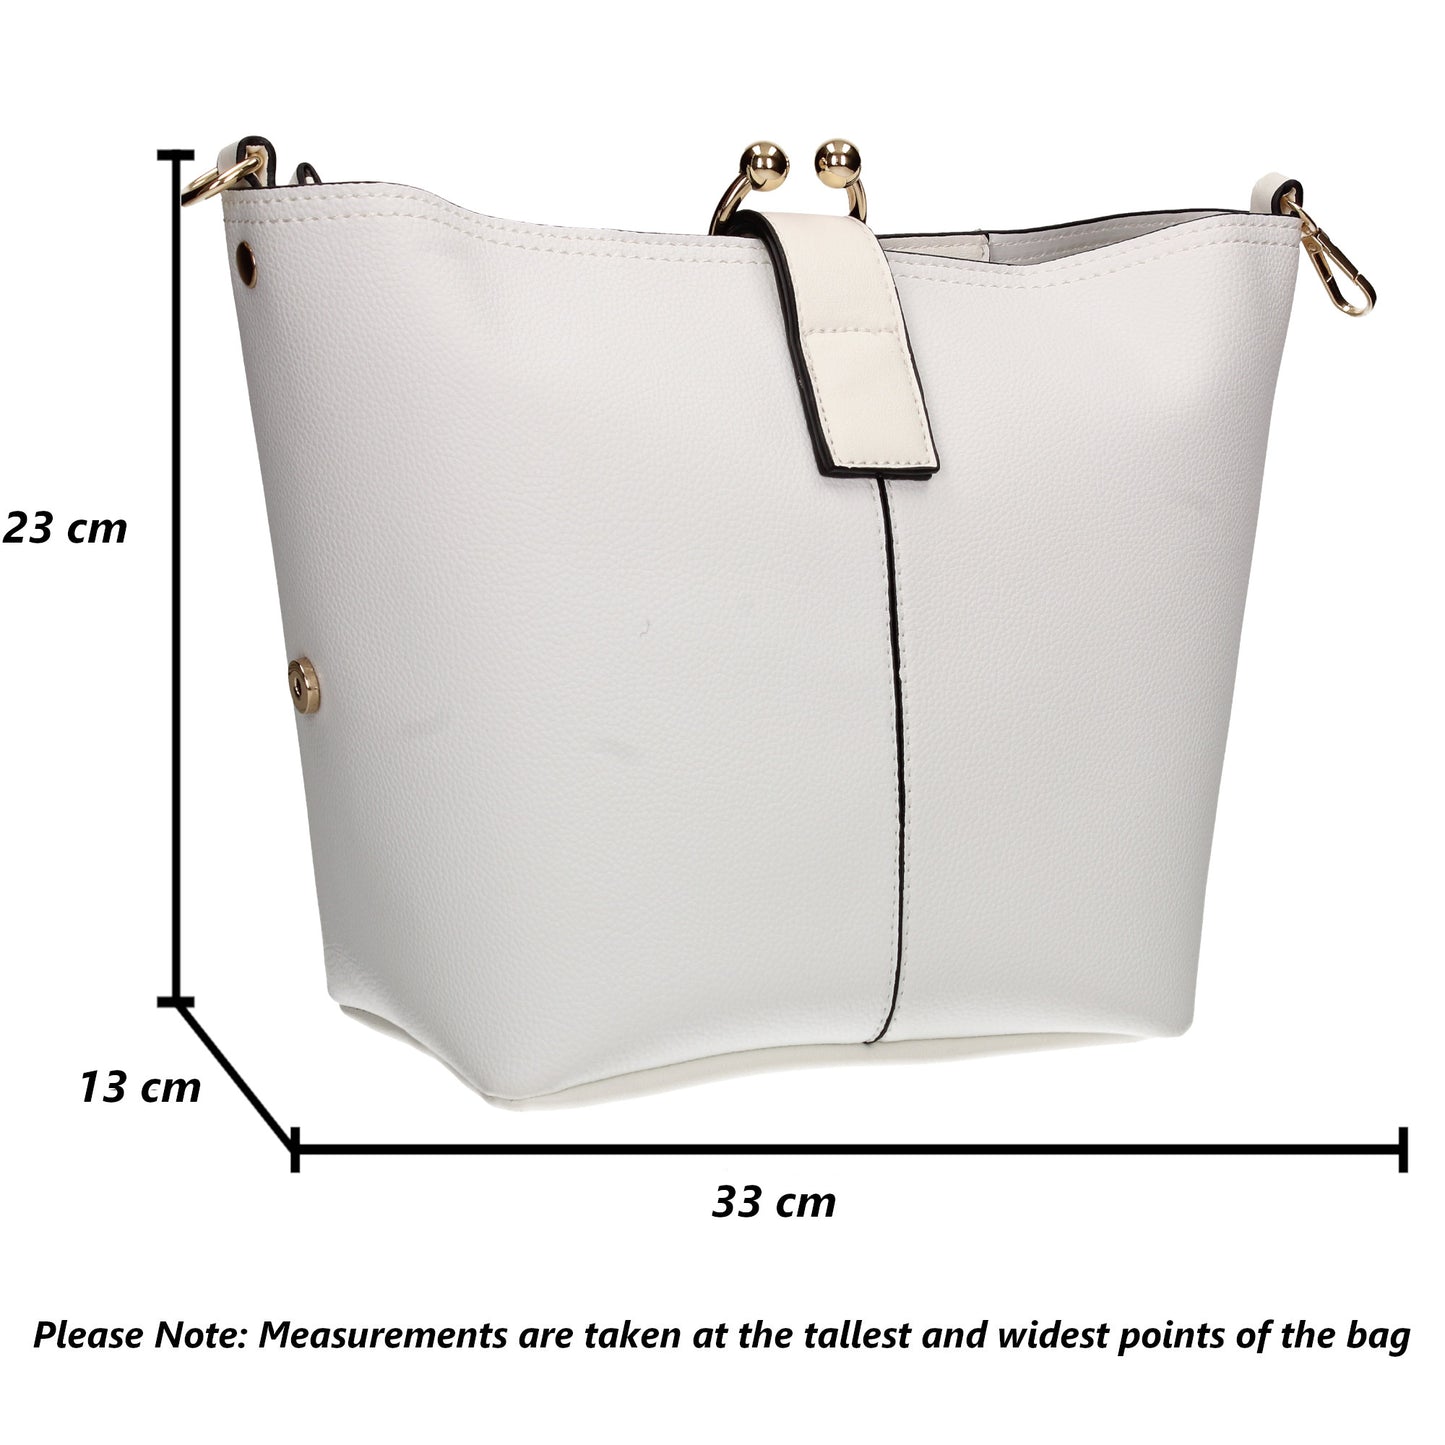 Kristina Faux Leather Bucket Bag Handbag White